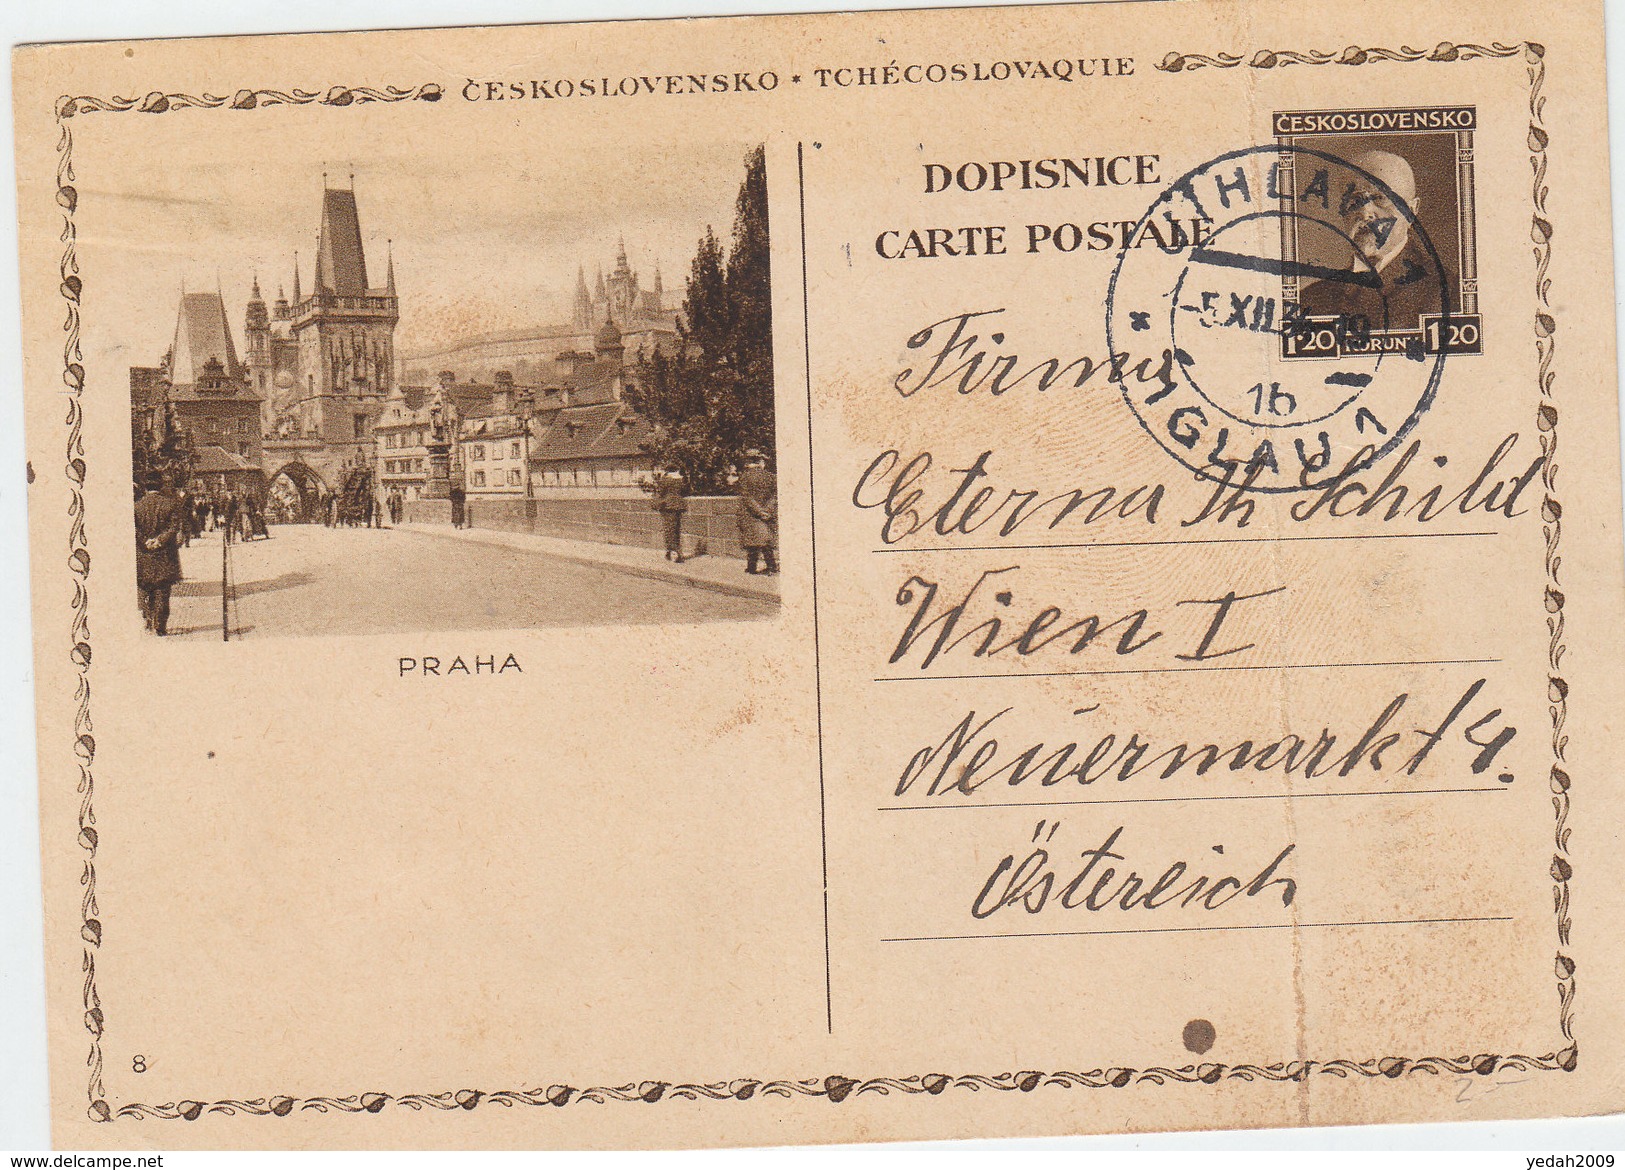 CZECHOSLOVAKIA POSTAL CARD  1934 - Sobres